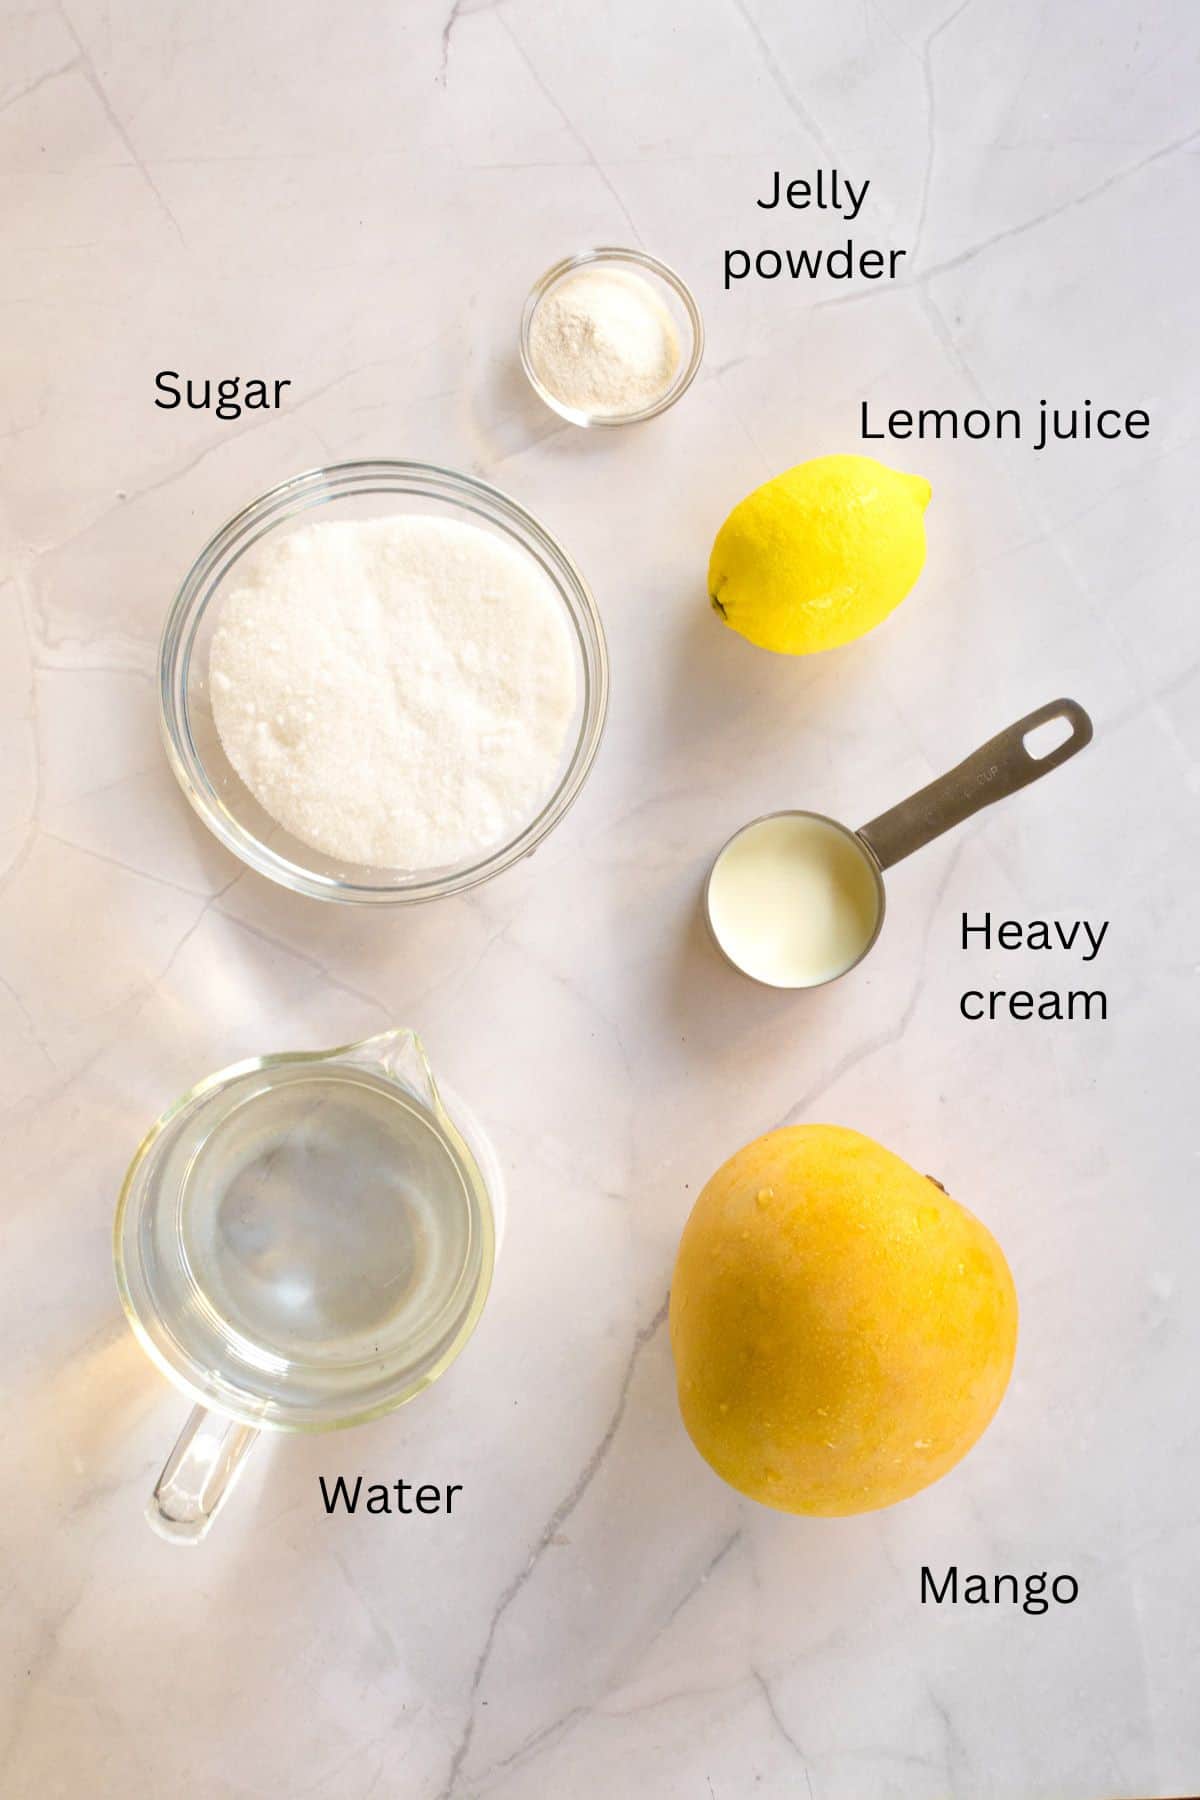 Sugar, agar agar powder, lemon, heavy cream, mango, water against a marble background.